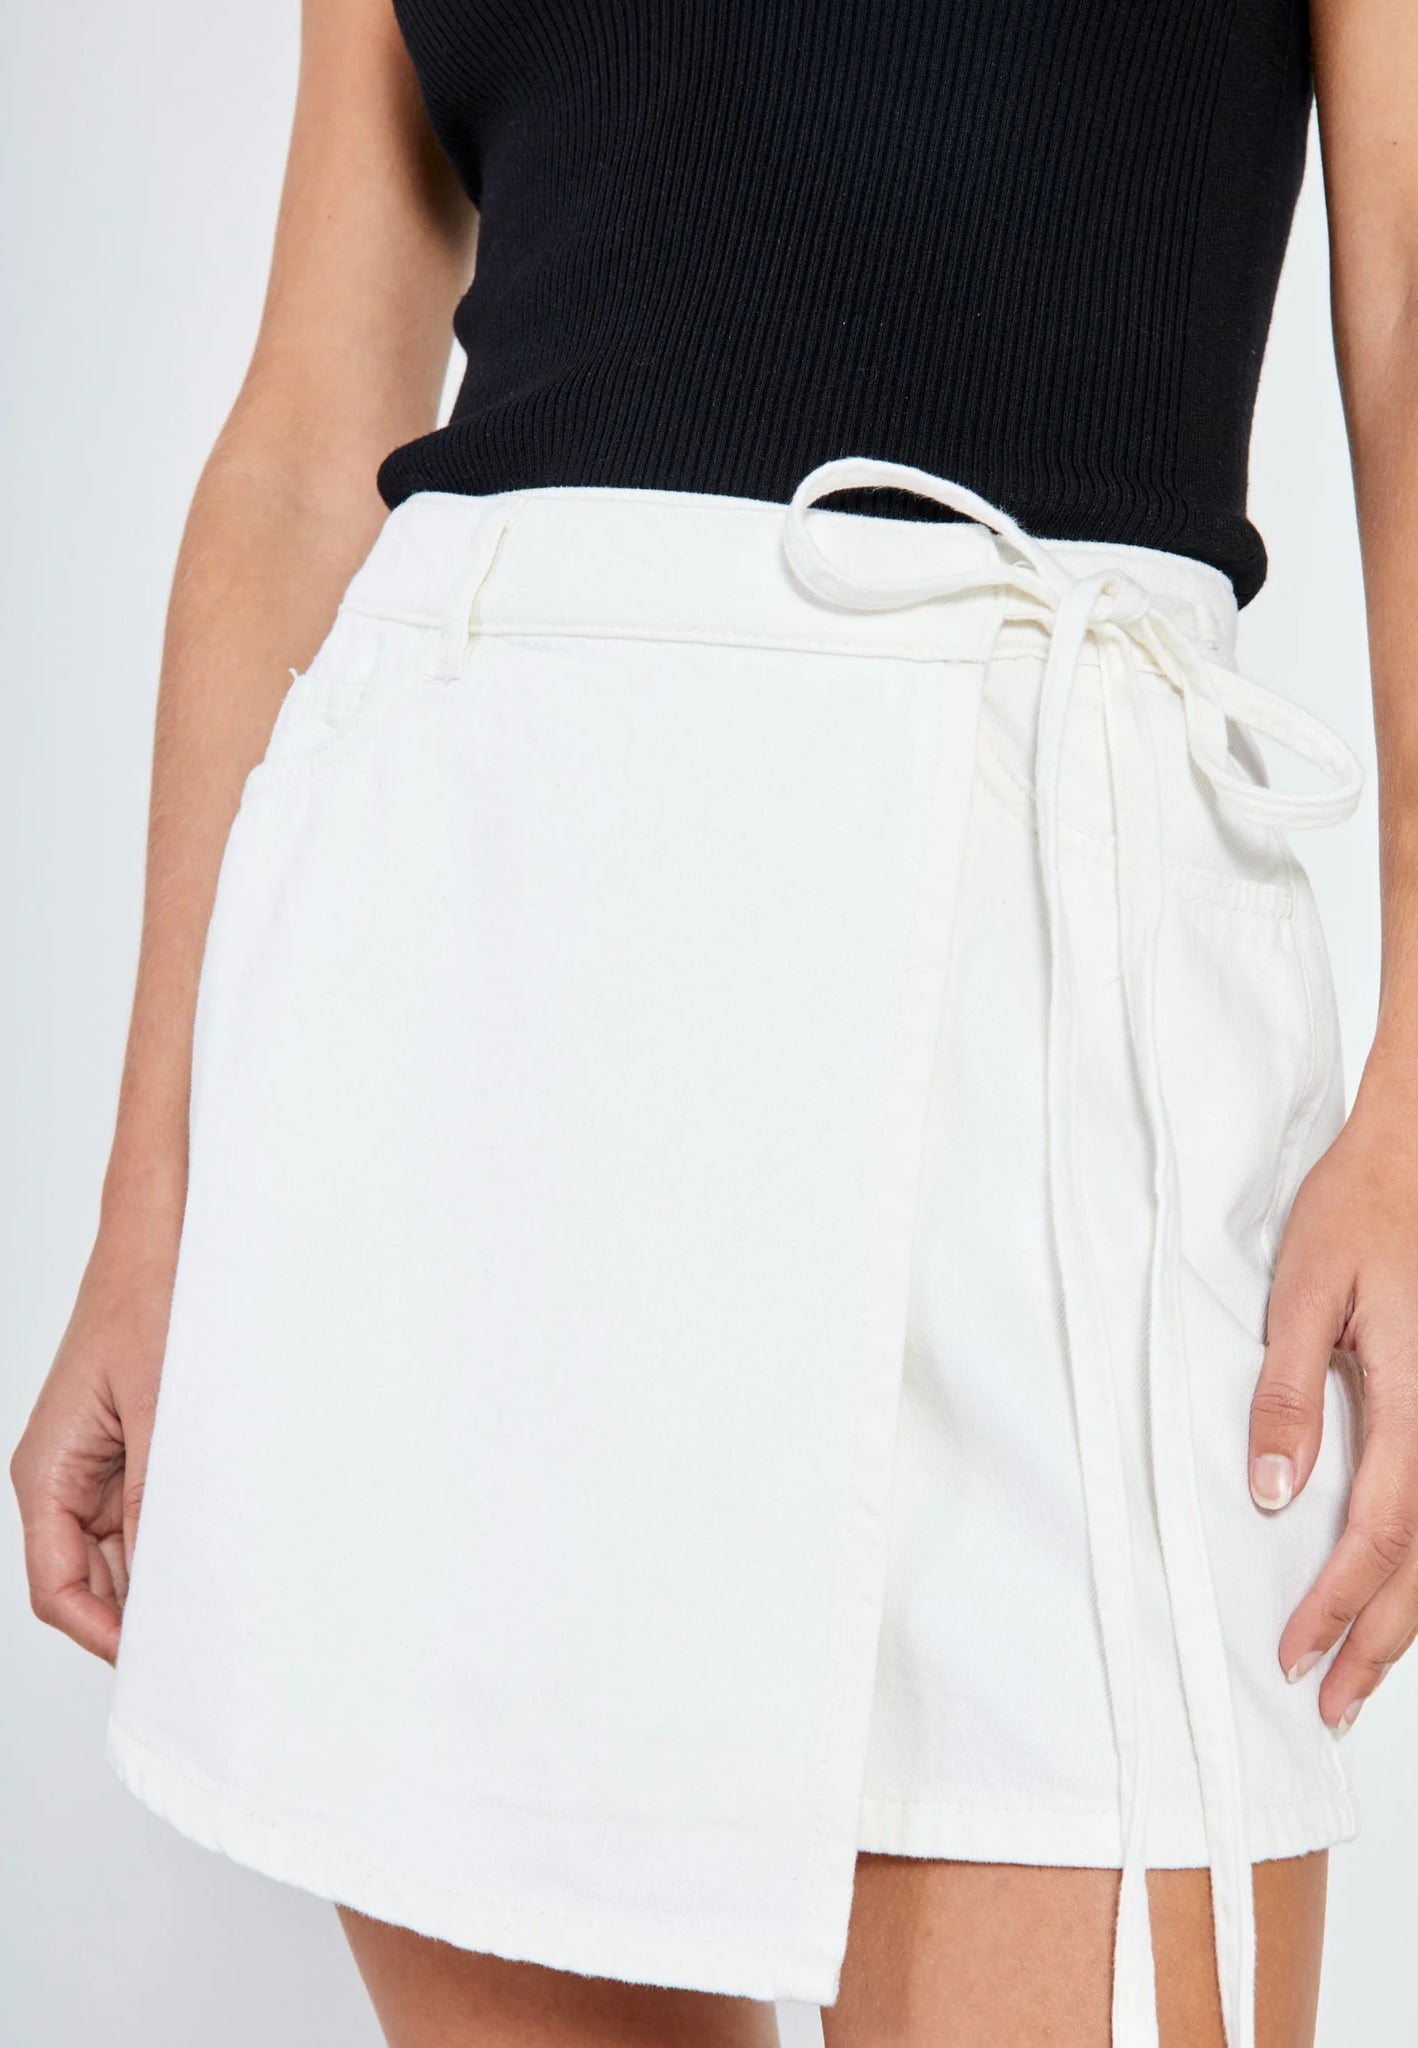 Ninni wrap denim skirt in white wash